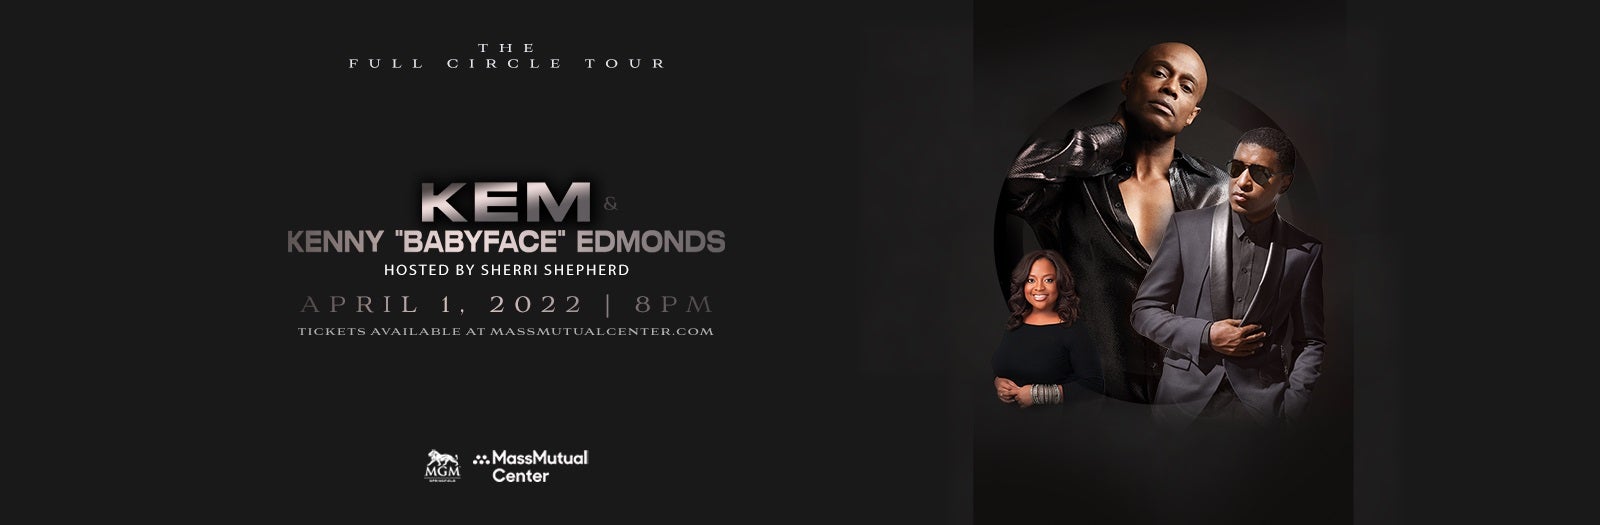 Kem Concert Schedule 2022 For Immediate Release: R&B Legends Kem & Kenny 'Babyface' Edmonds Announce  “The Full Circle Tour” | Massmutual Center